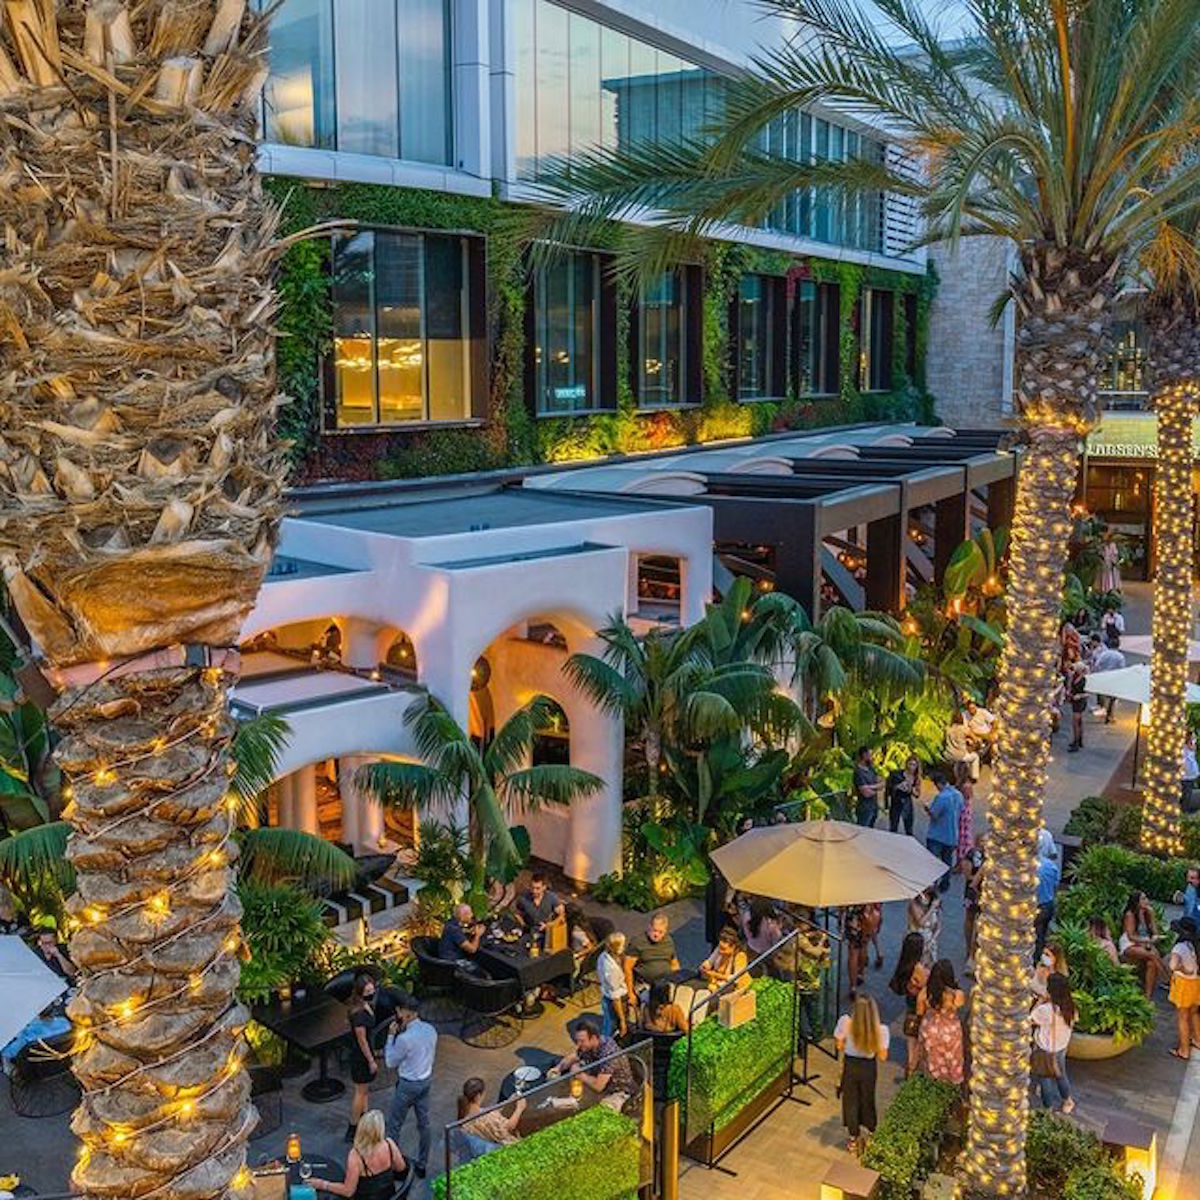 Westfield UTC Shopping Centre in San Diego, CA